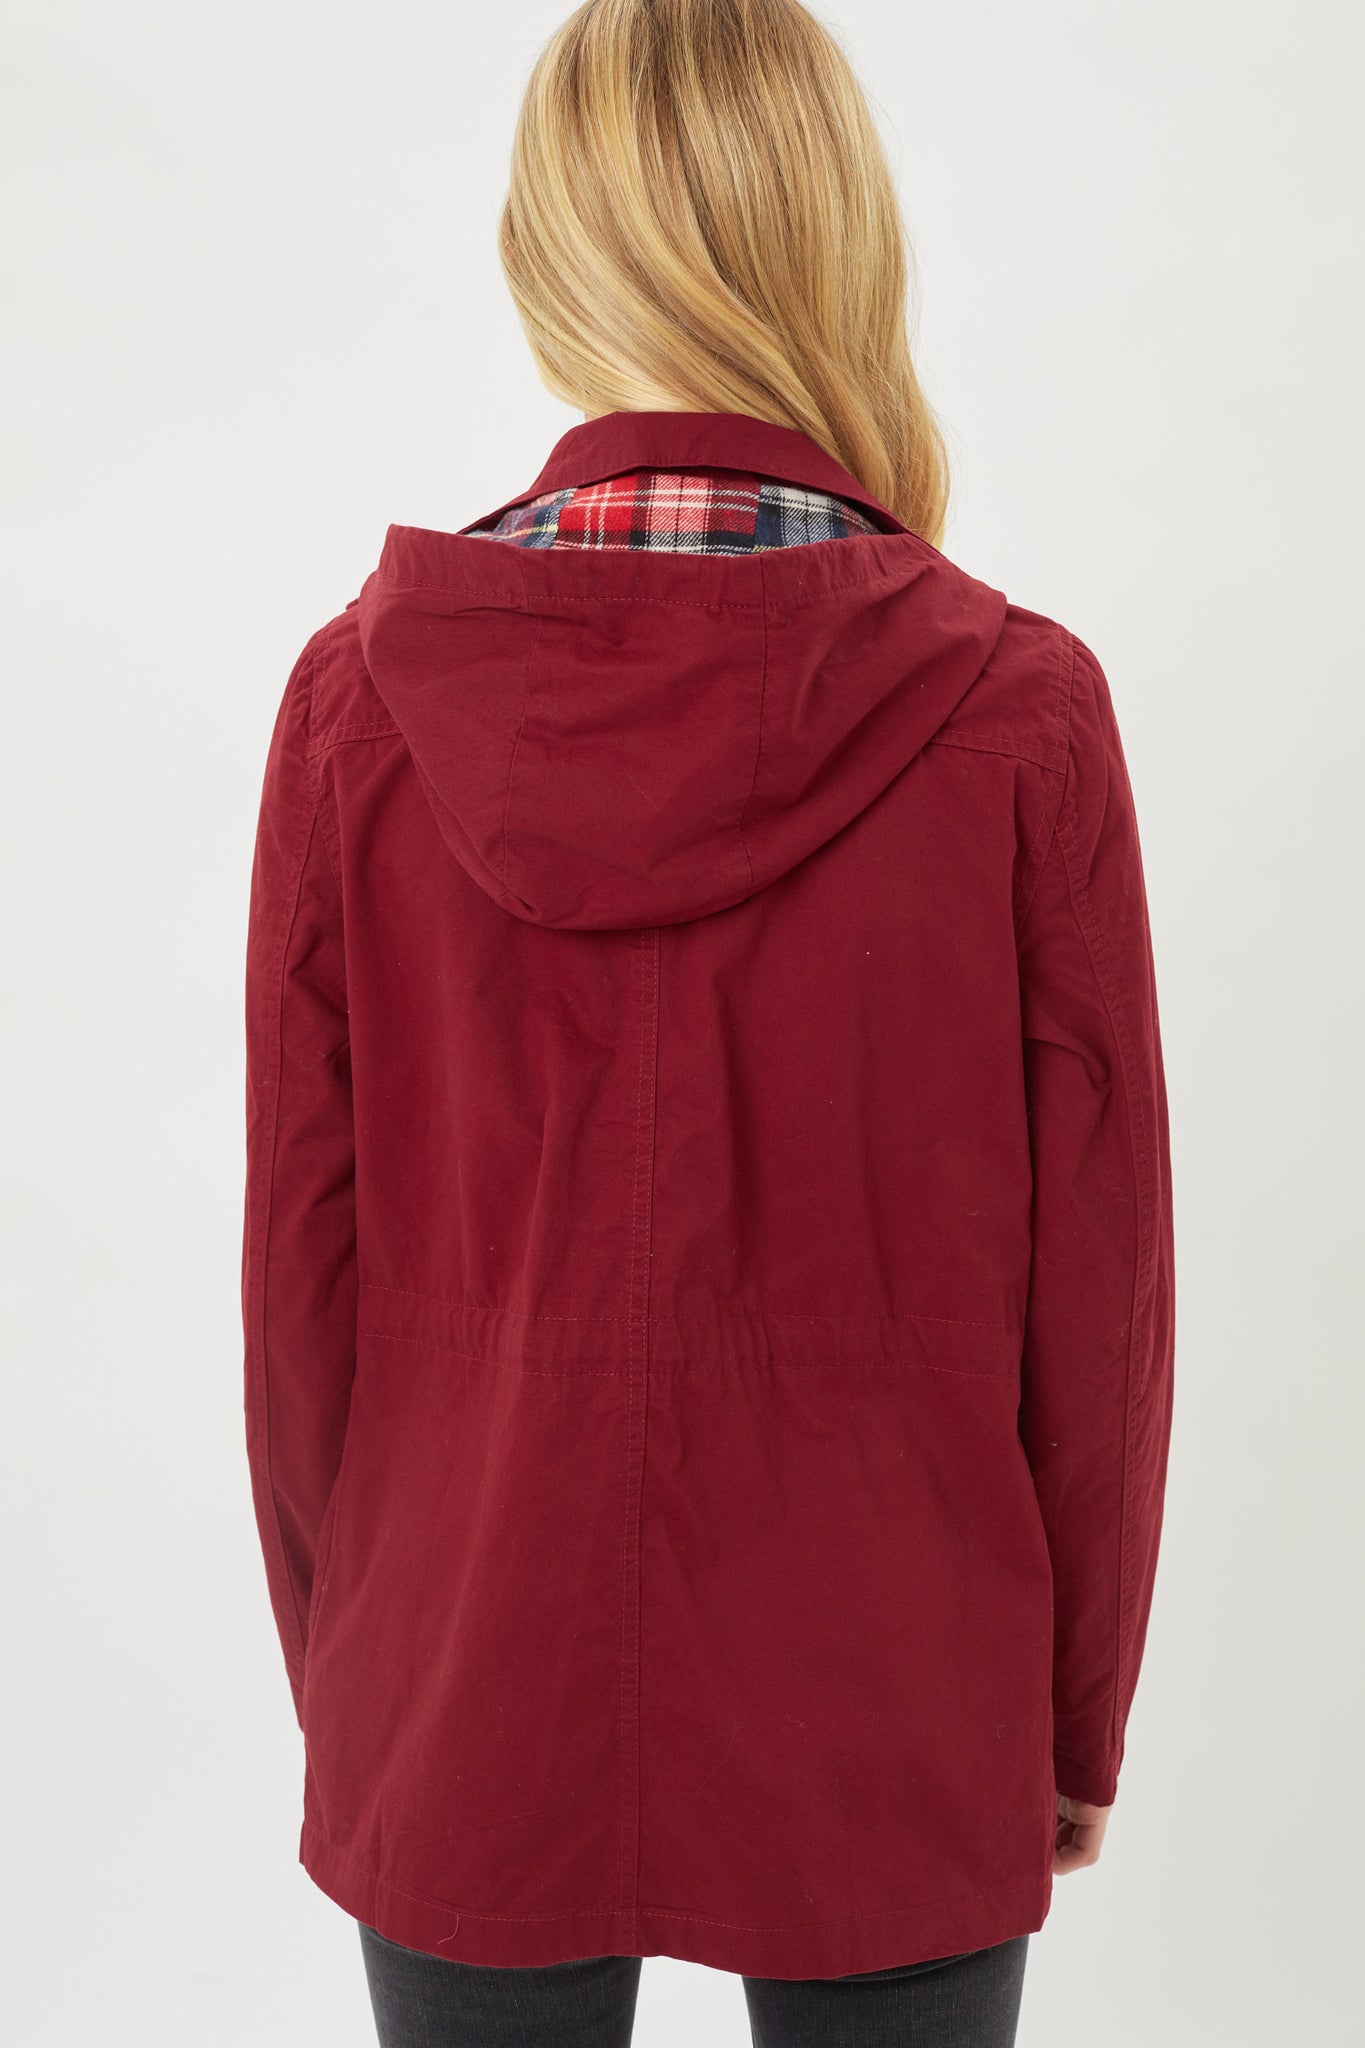 Flannel Plaid Hoodie Utility Cotton Anorak Jacket